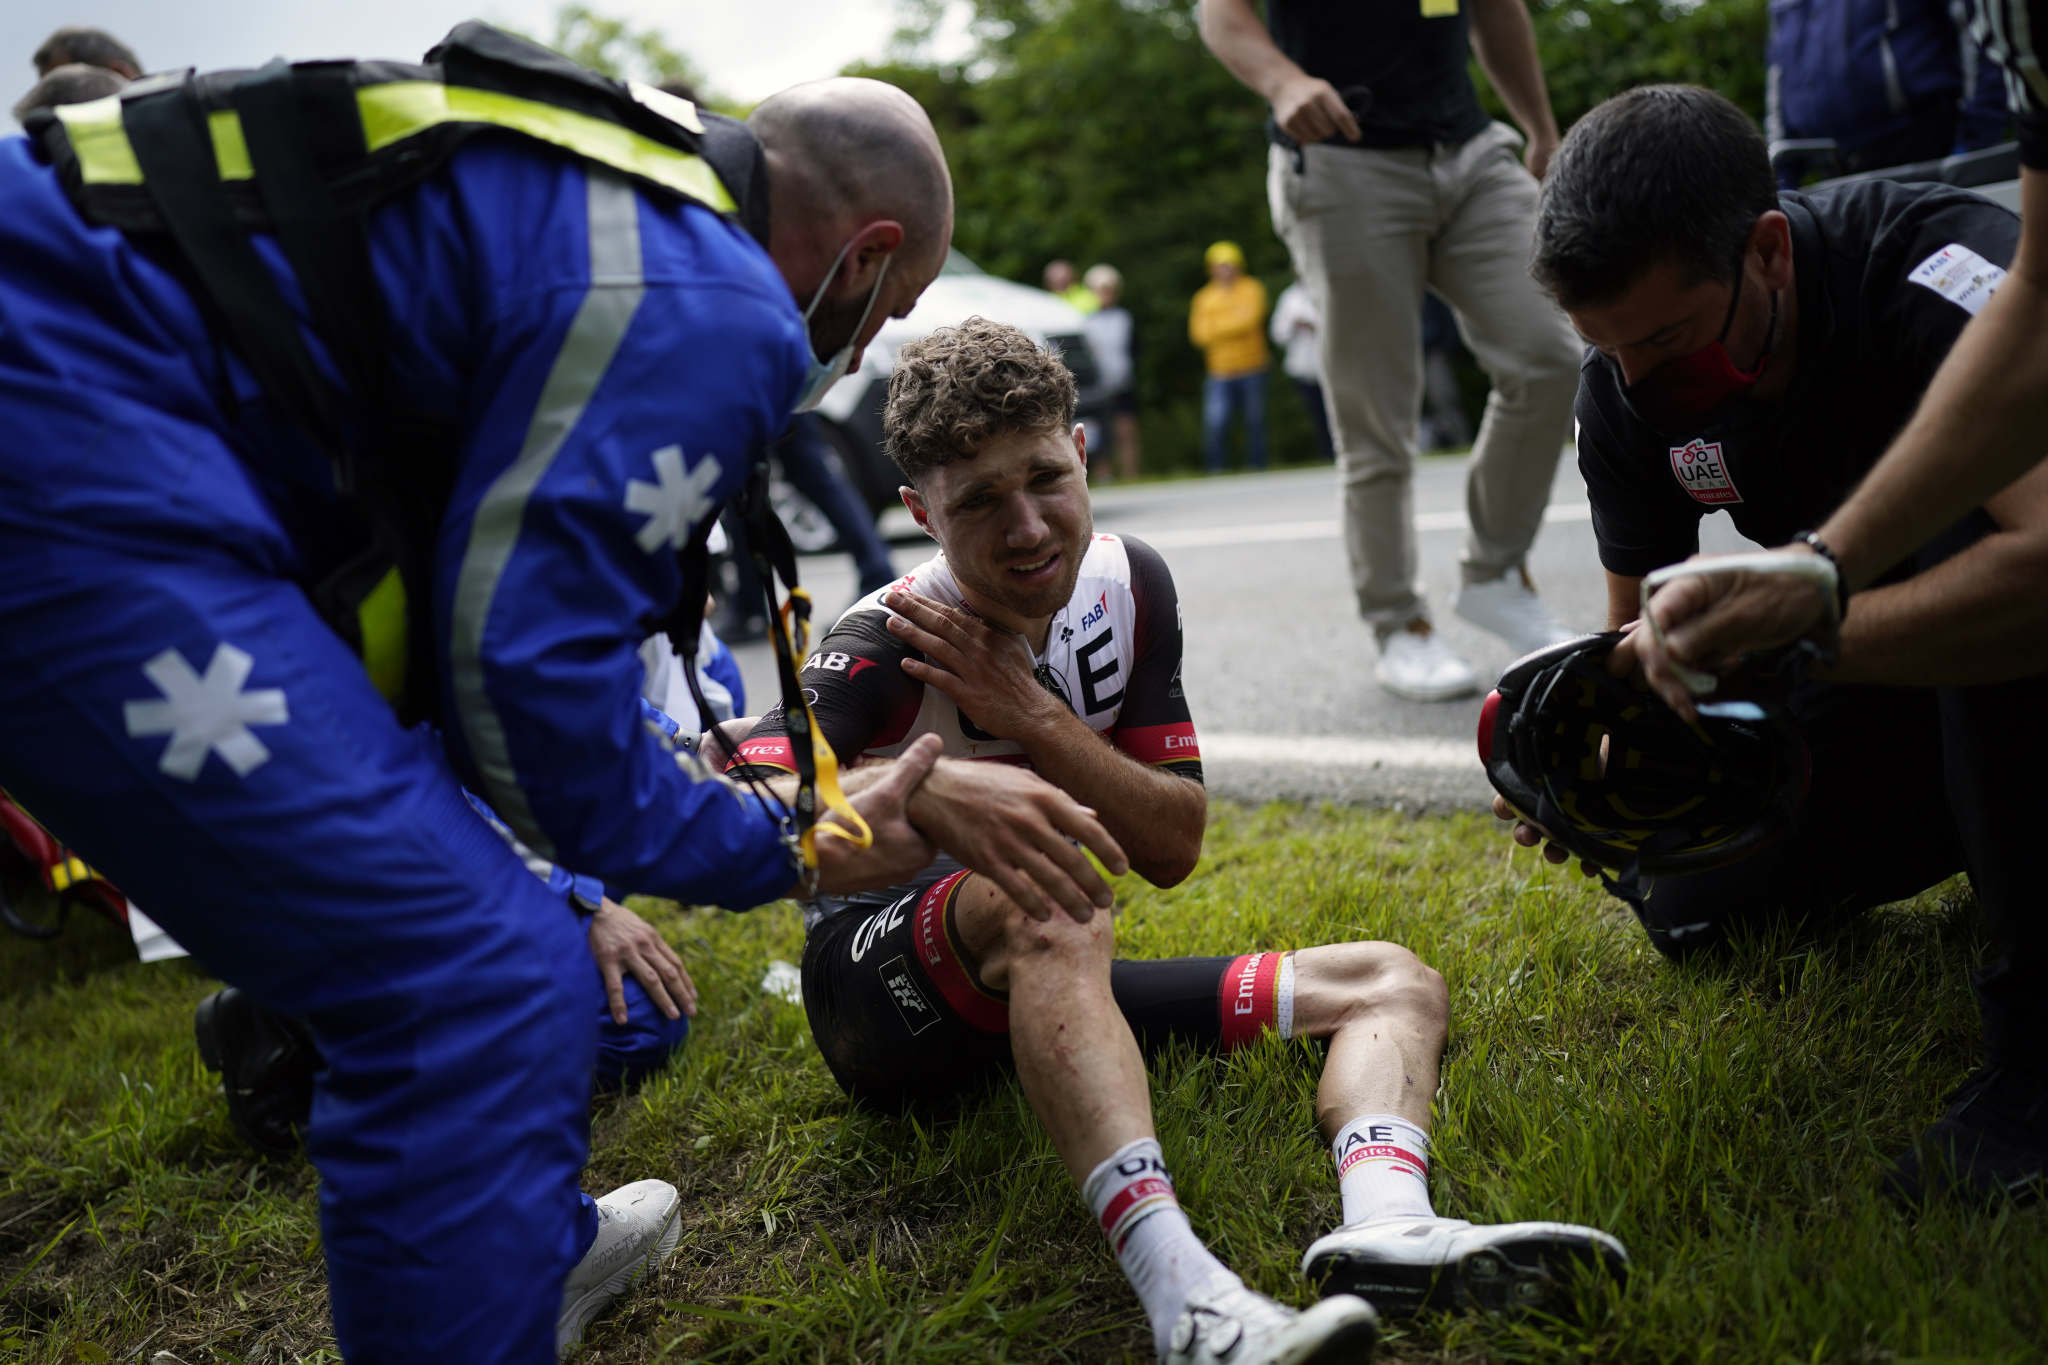 Организатор велогонки «Тур де Франс» подала жалобу на виновницу серьёзного завала